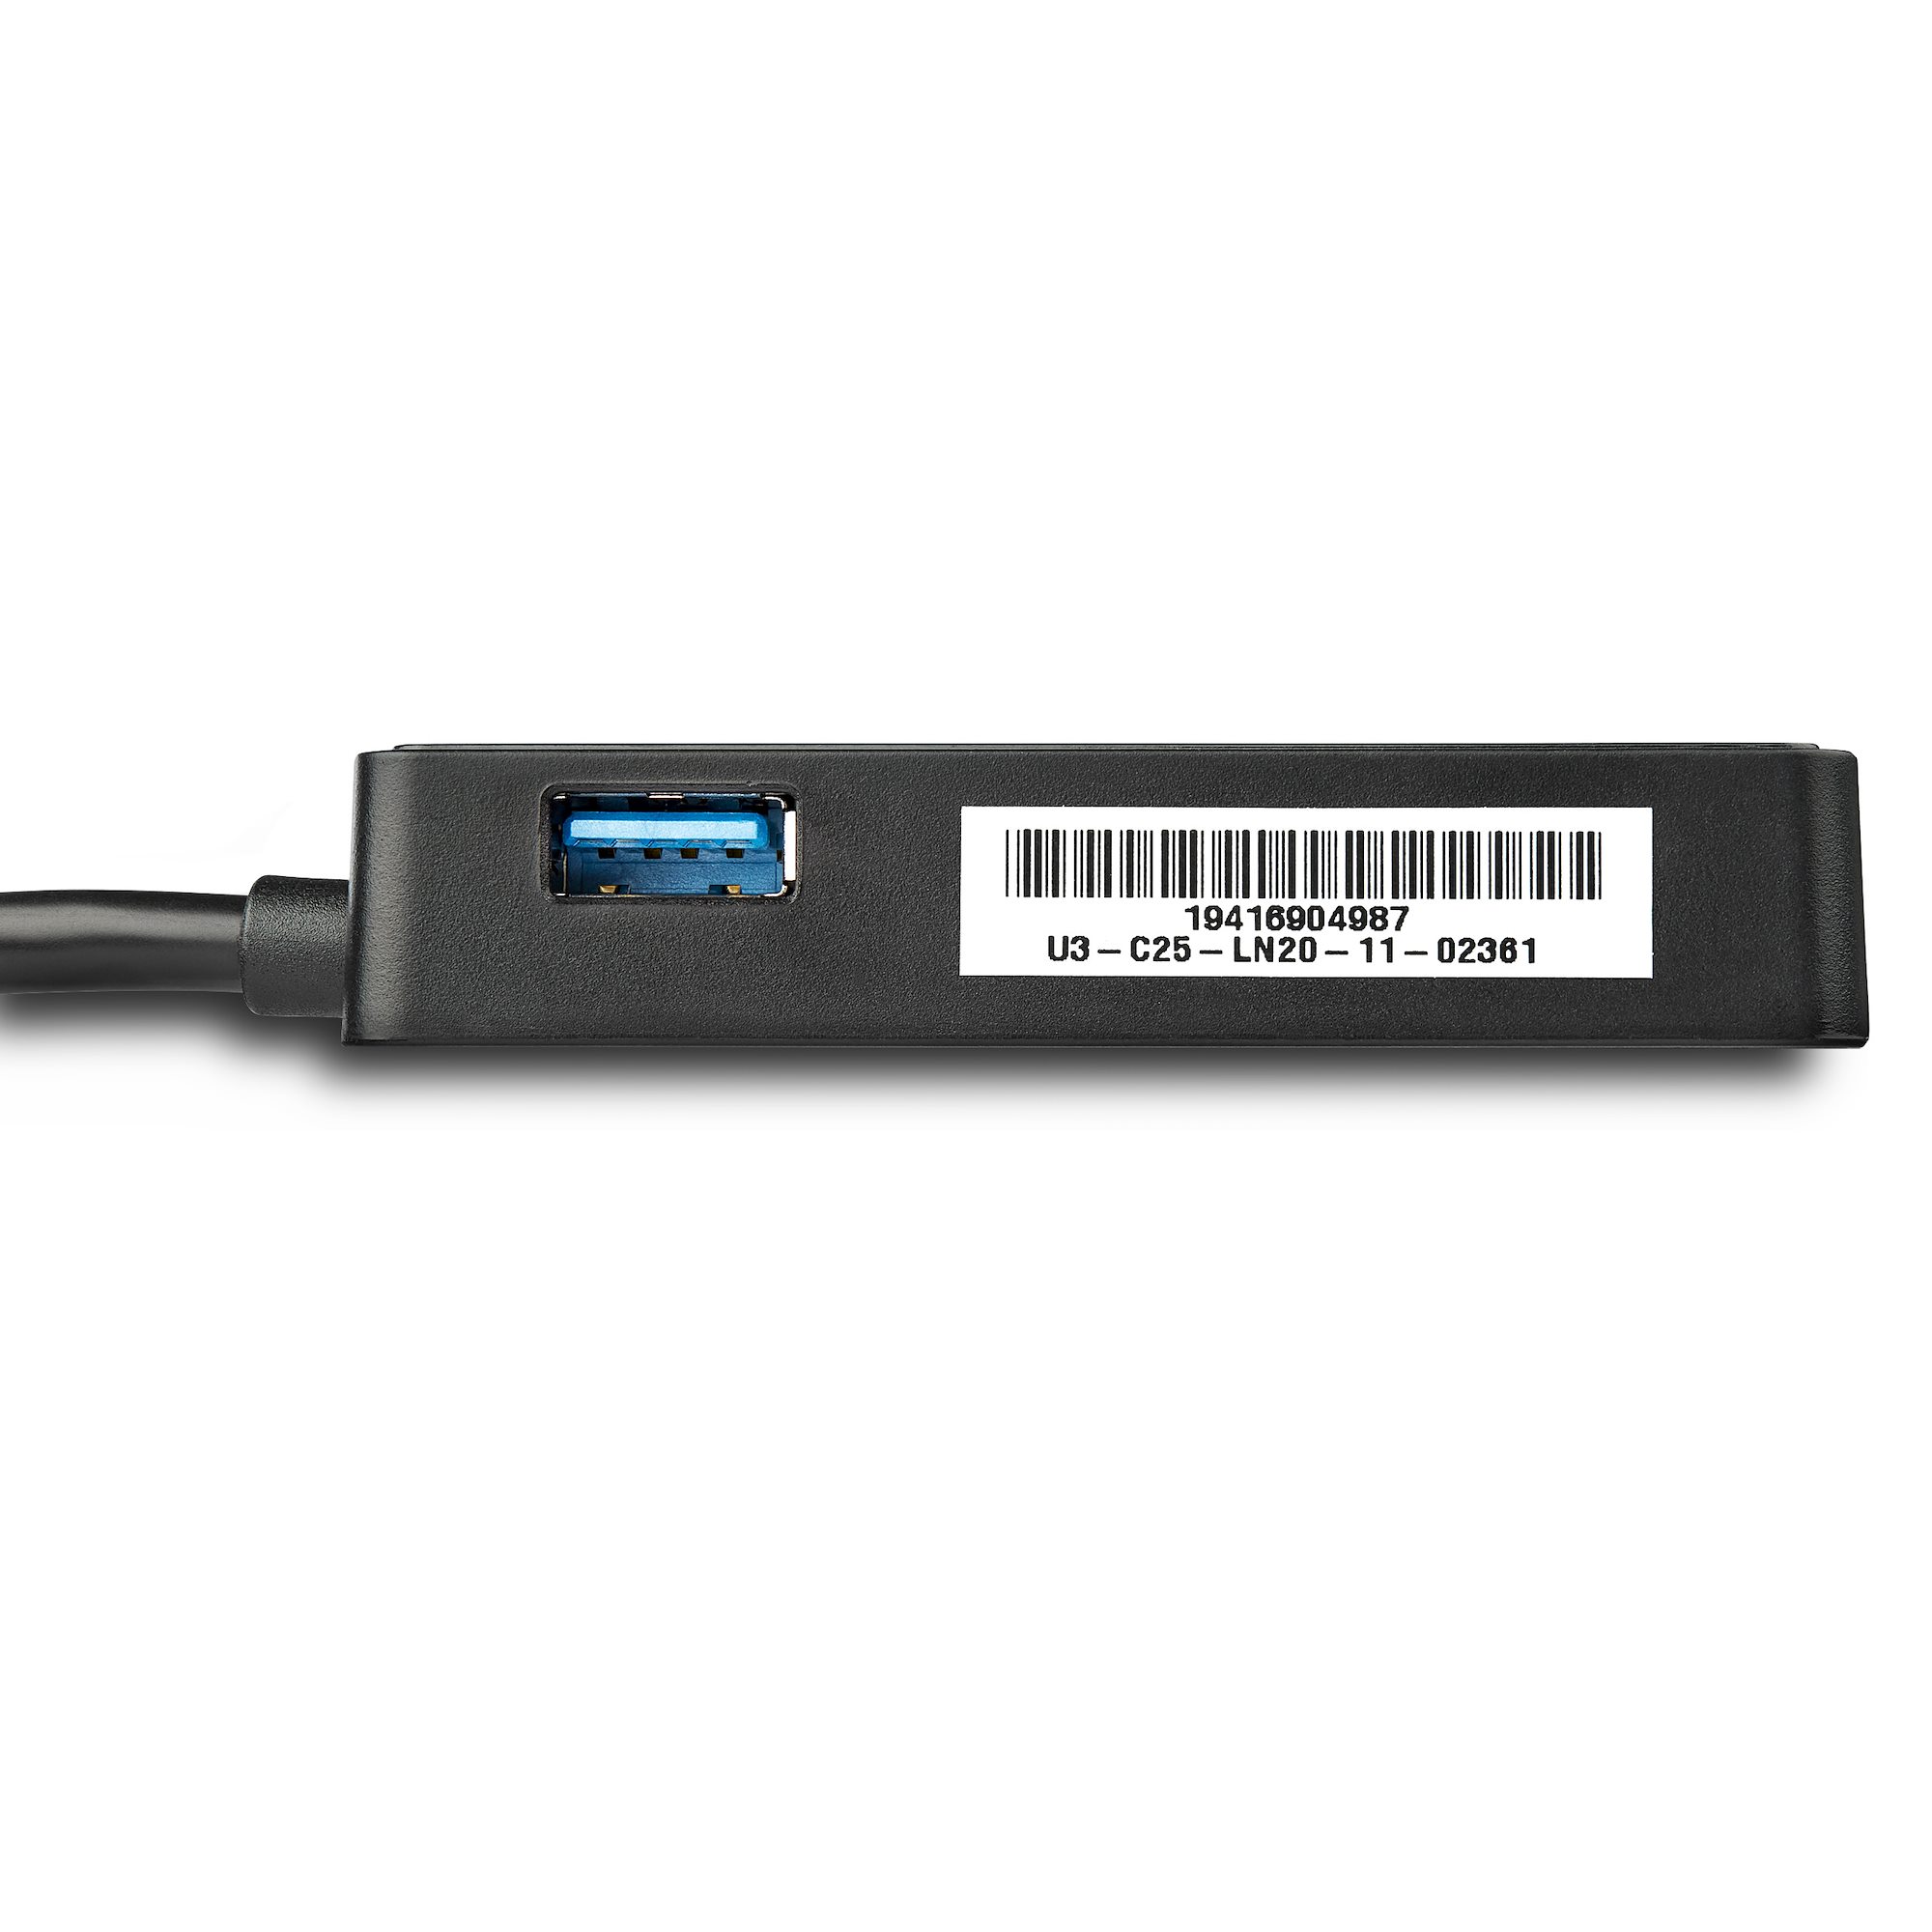 USB 3.0有線LAN変換アダプタ ギガビット対応 USBポート x1付き